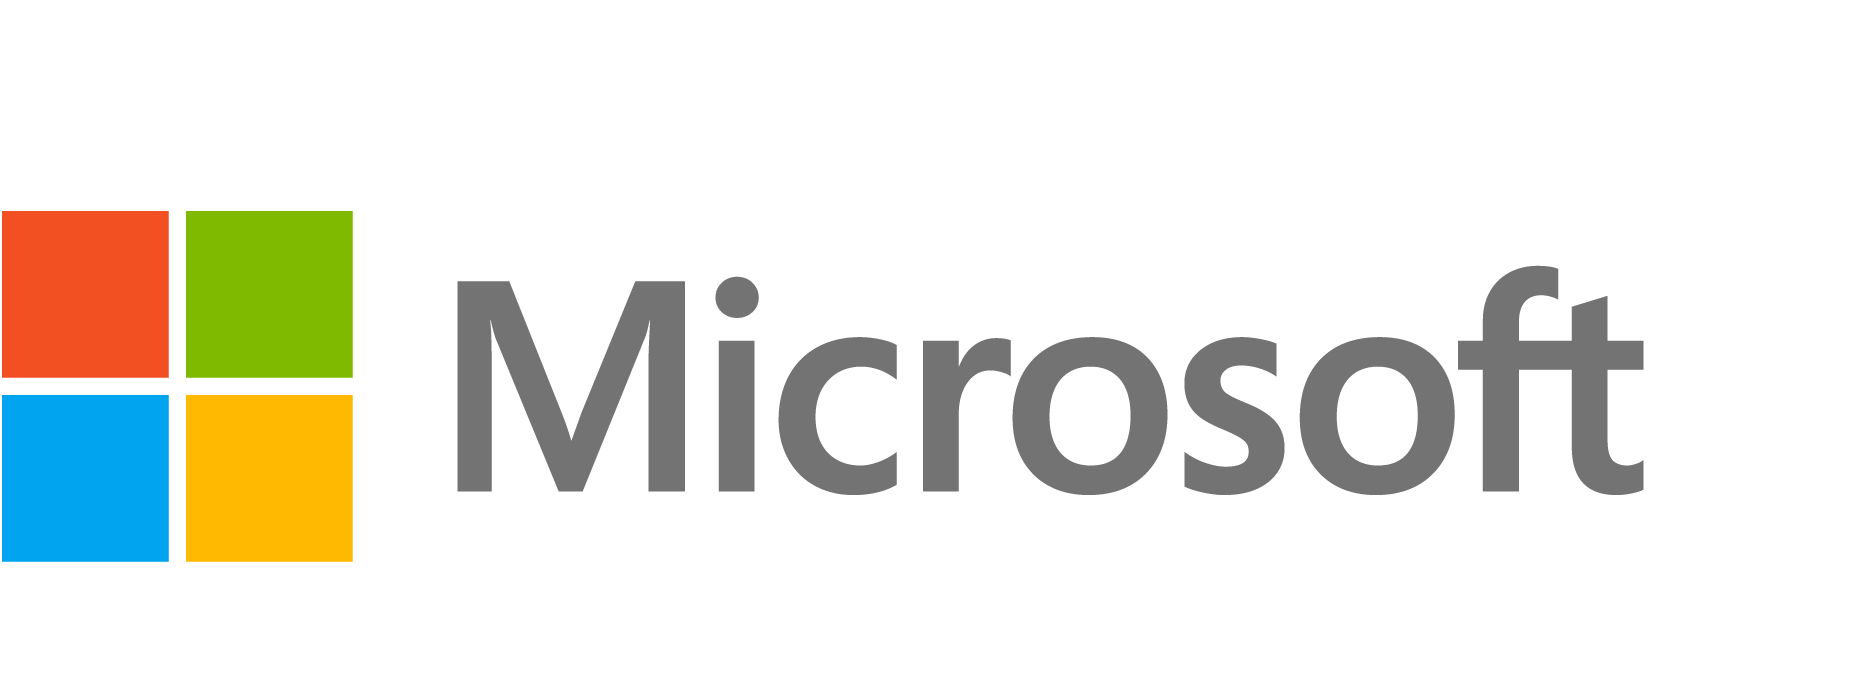 Microsoft Defender for Endpoint - Antywirus inny niż cała reszta